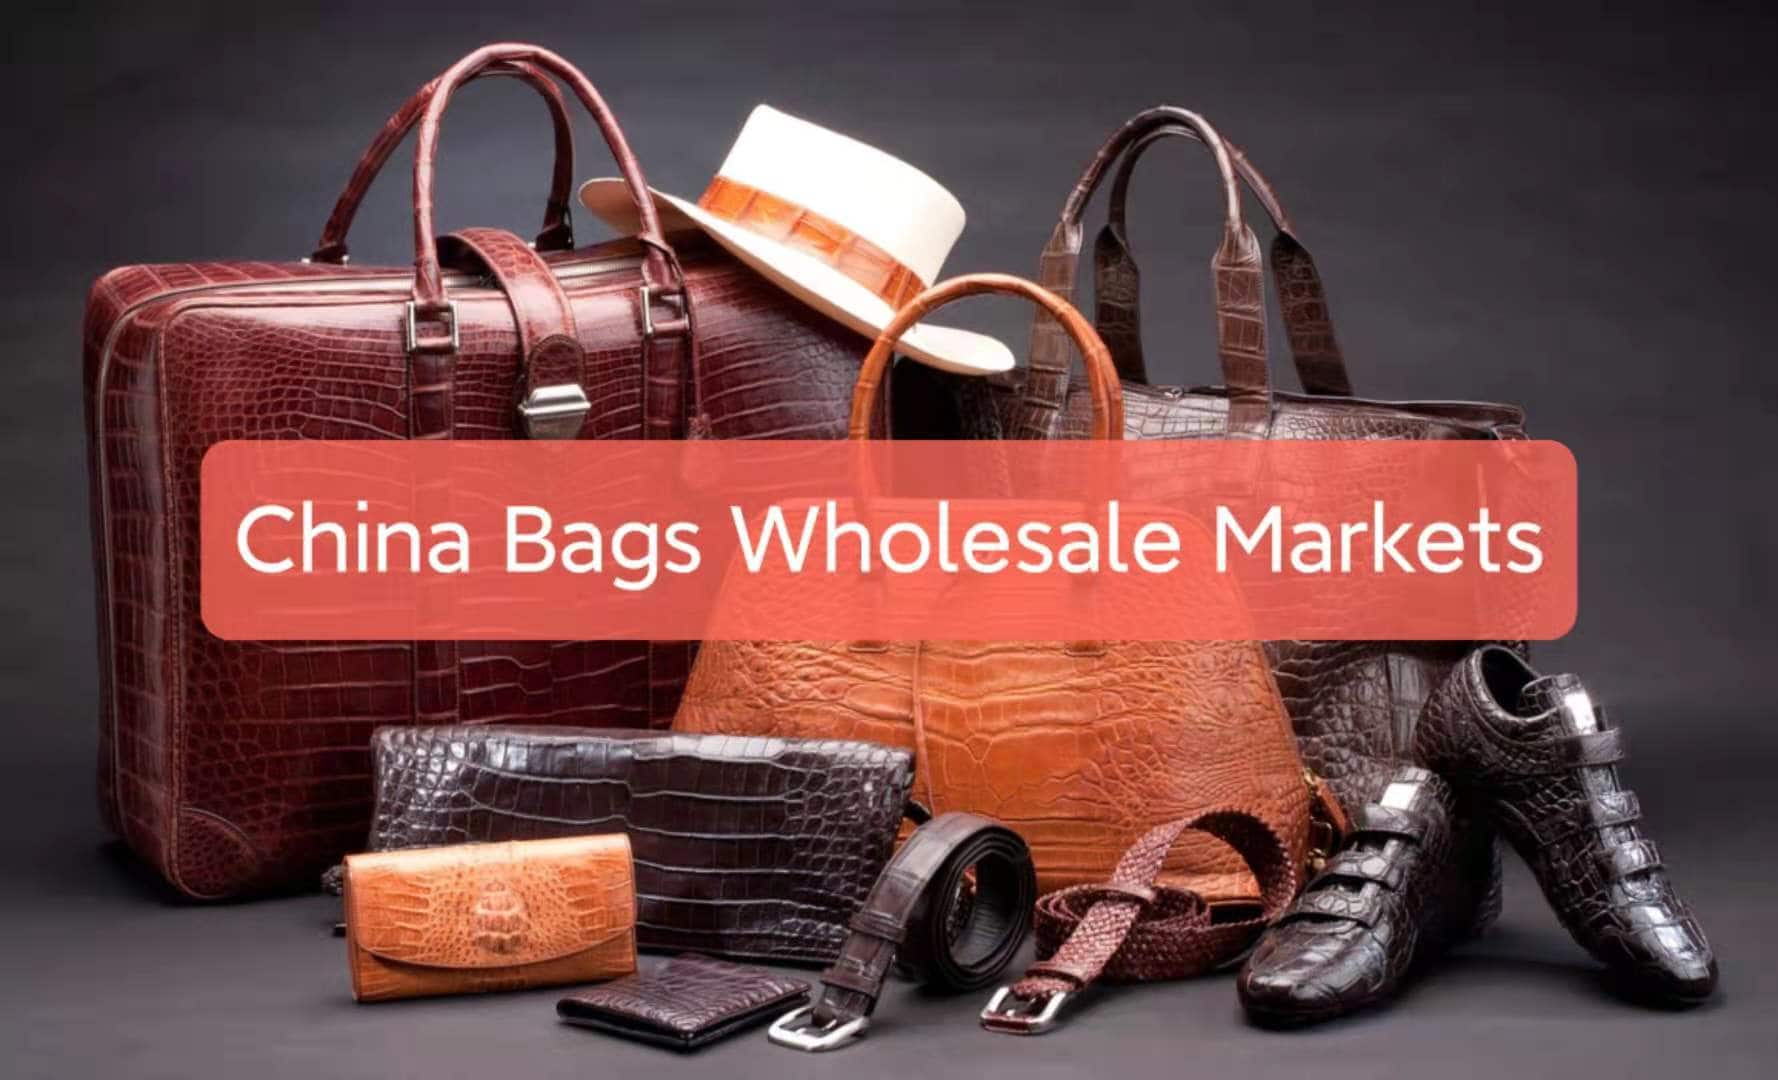 China bags wholesale markets